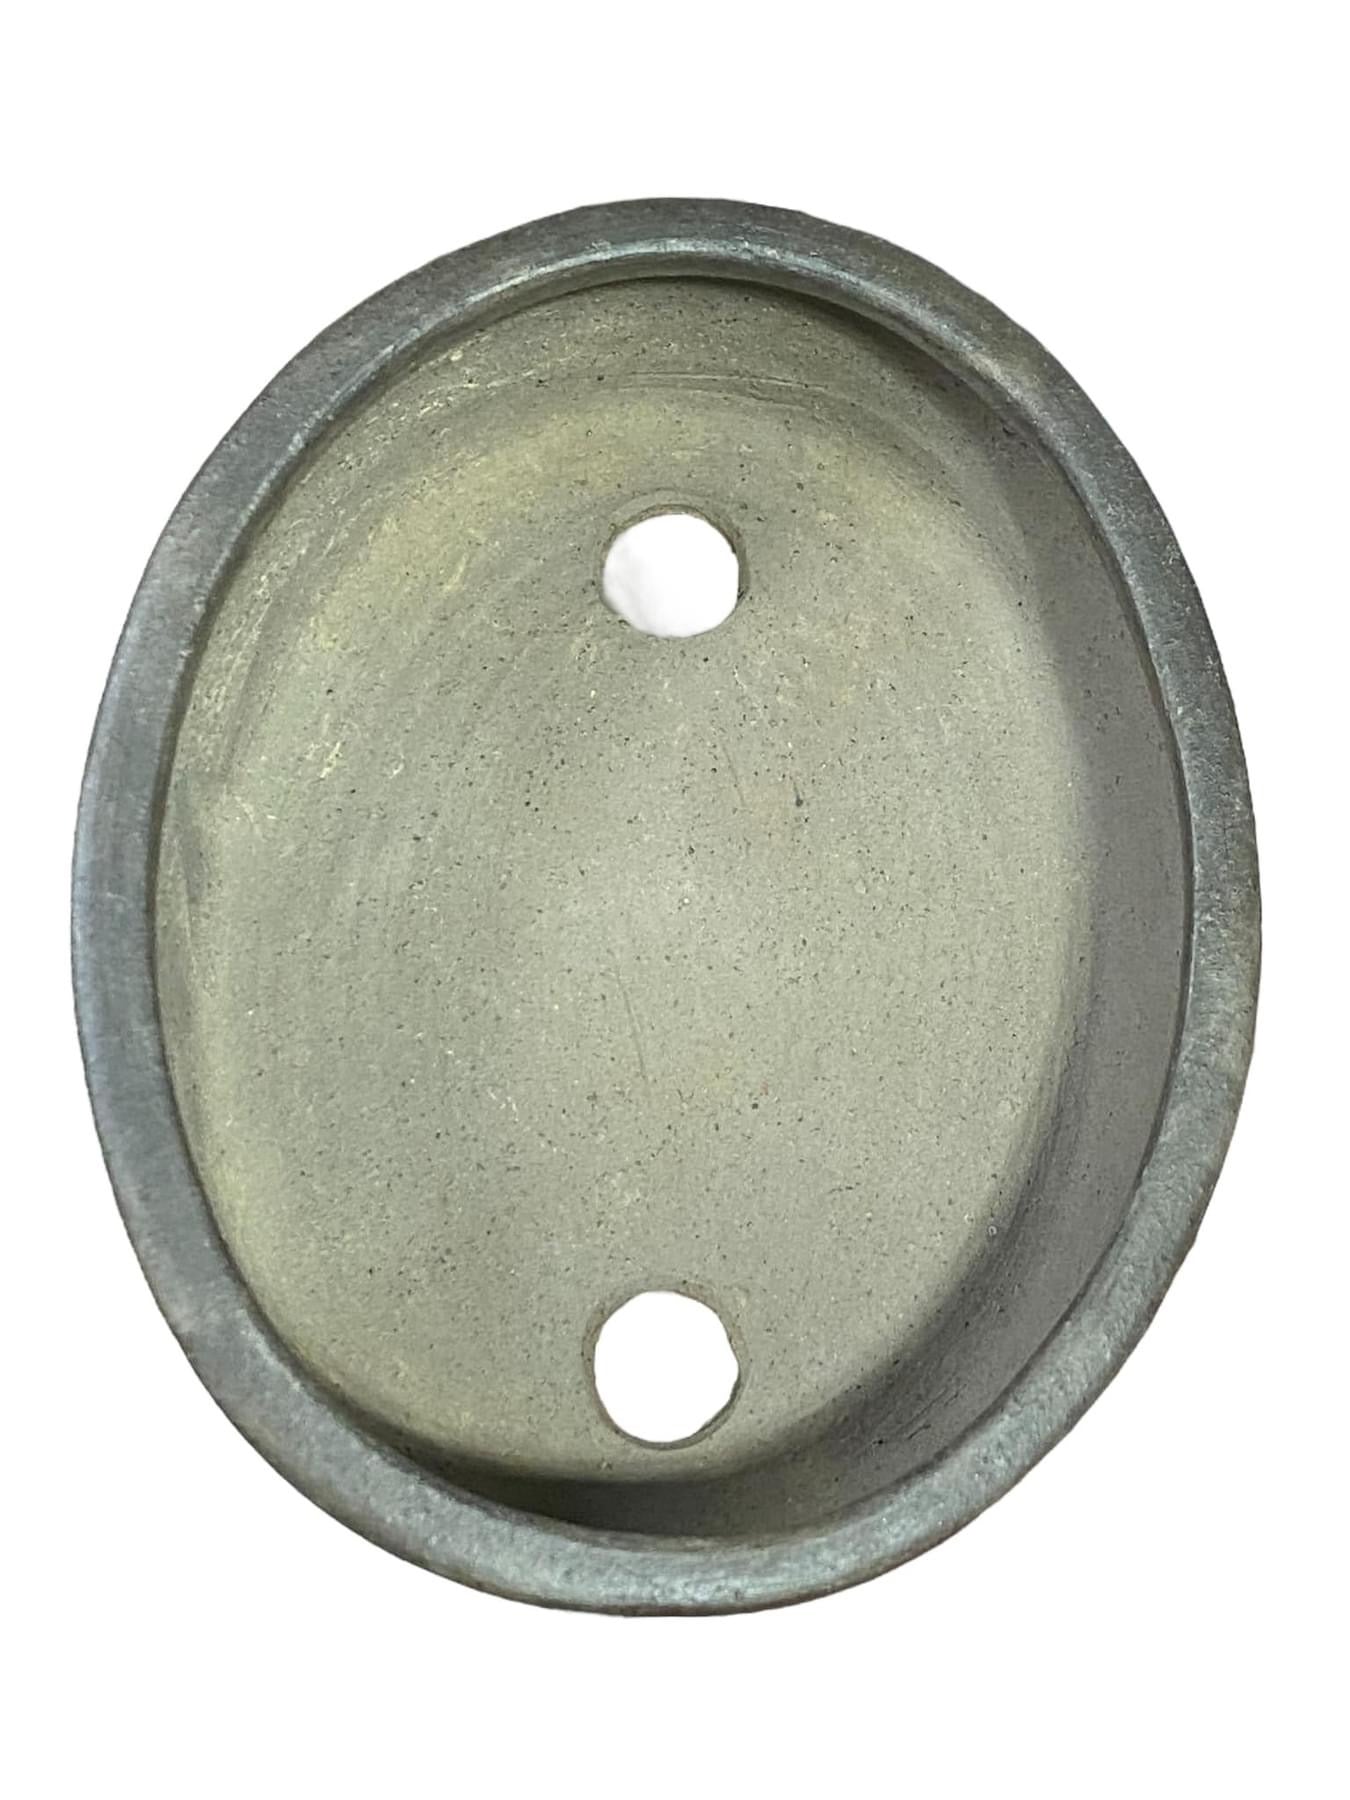 Syouzan Production - Stellar Value Oval Bonsai Pot with Patina (4-3/4” wide)